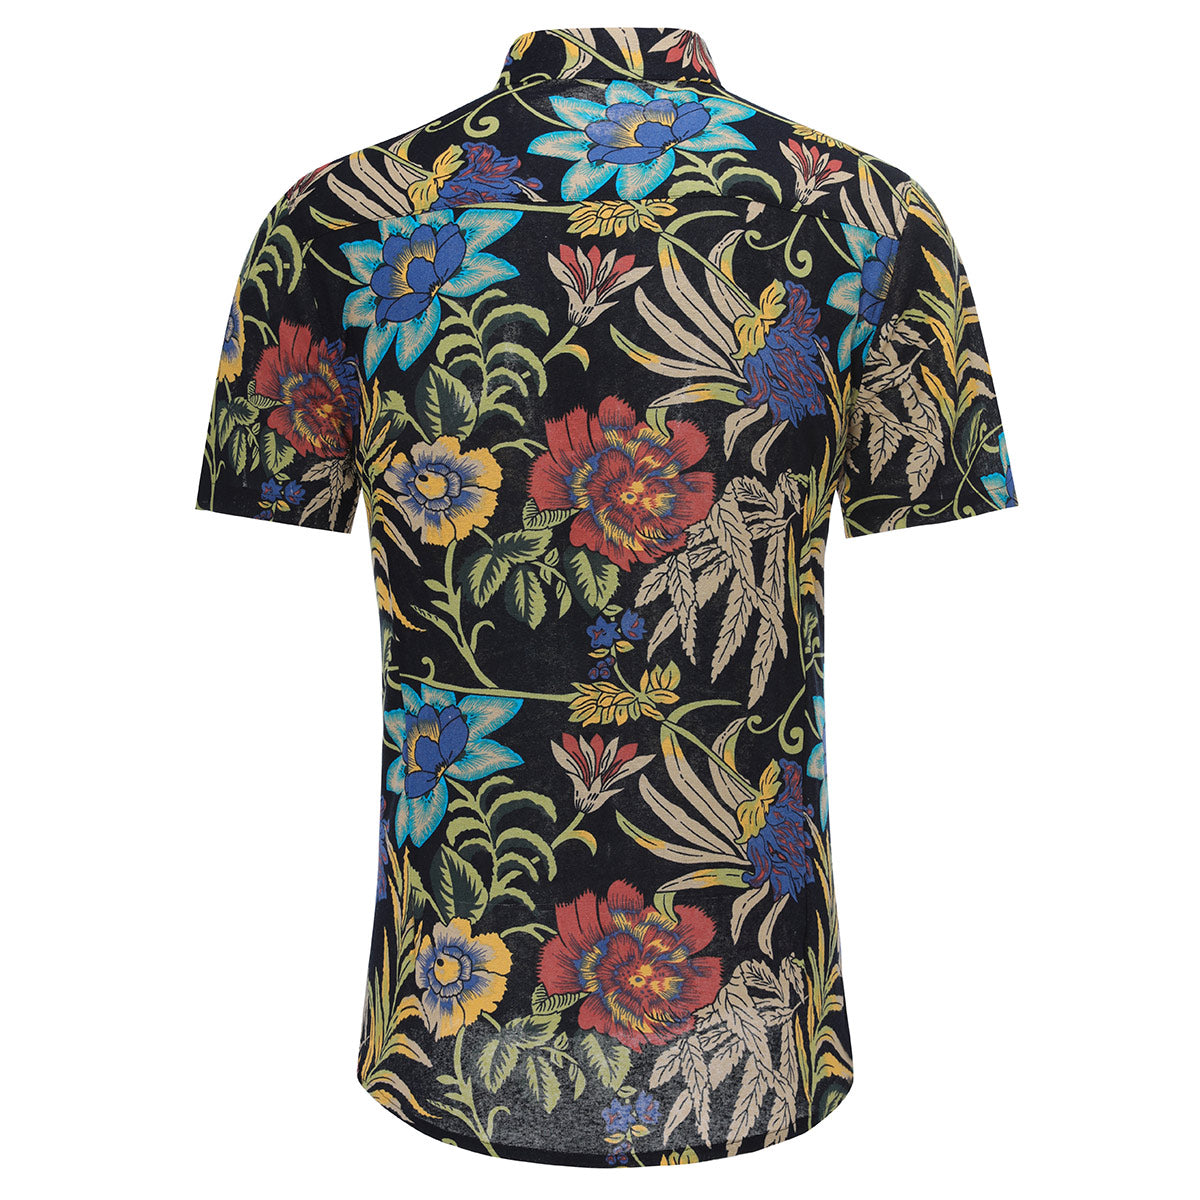 Men's Slim Fit Multicolor Flower Print Short Sleeve Shirt